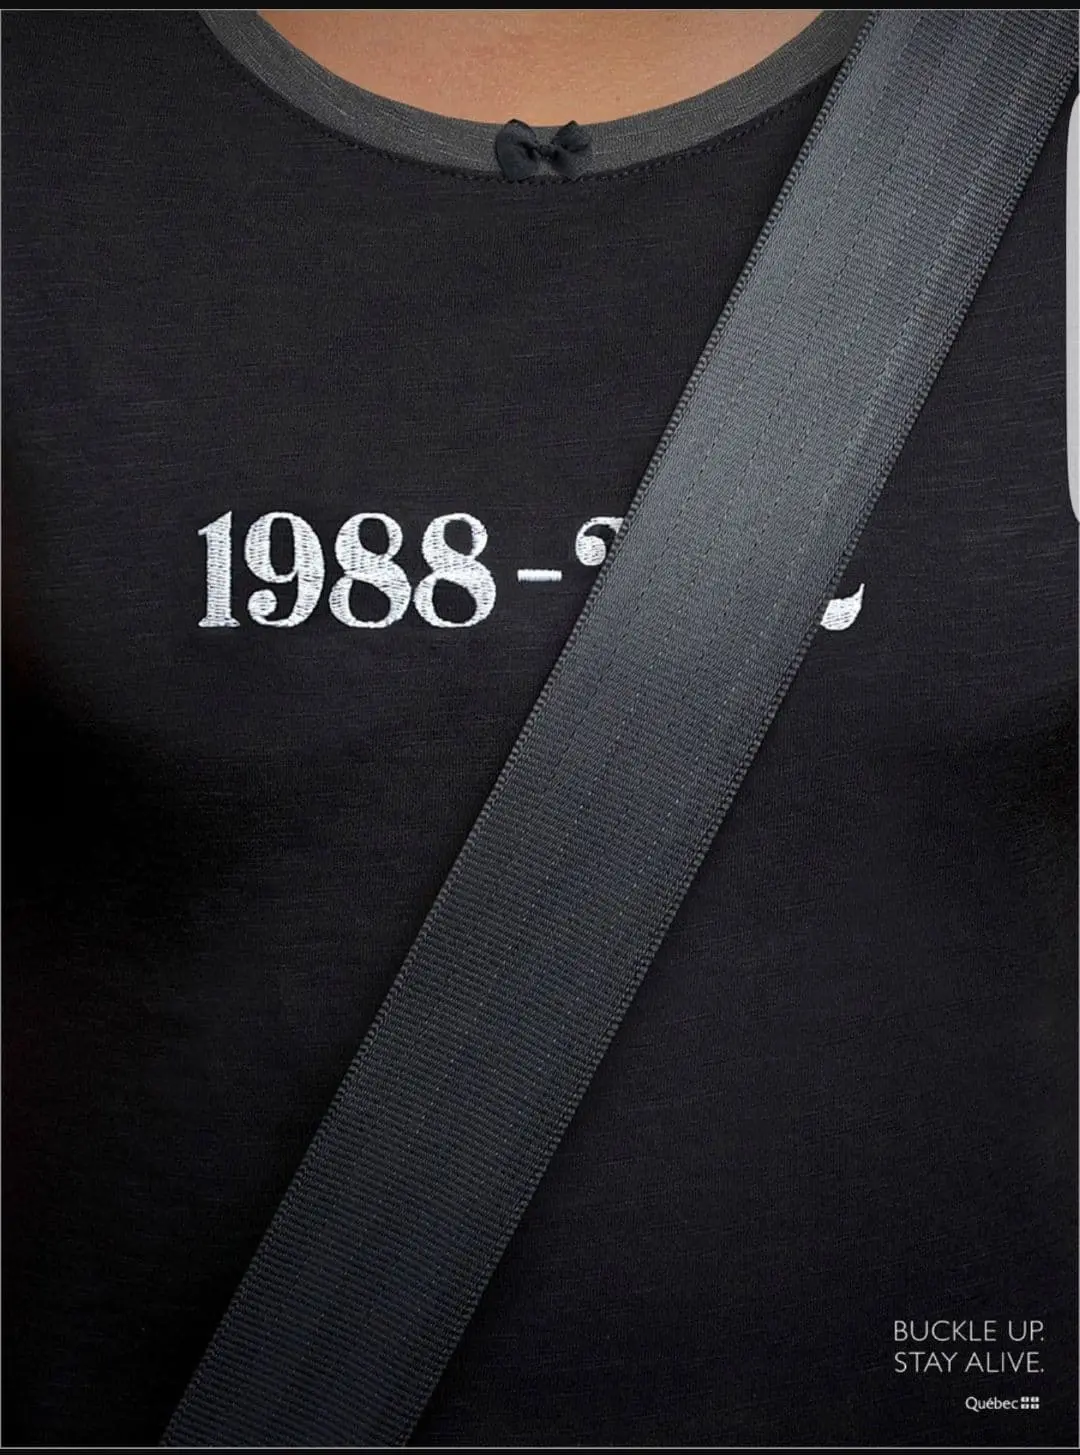 Advertisement Creating Seat Belt Awareness When Driving